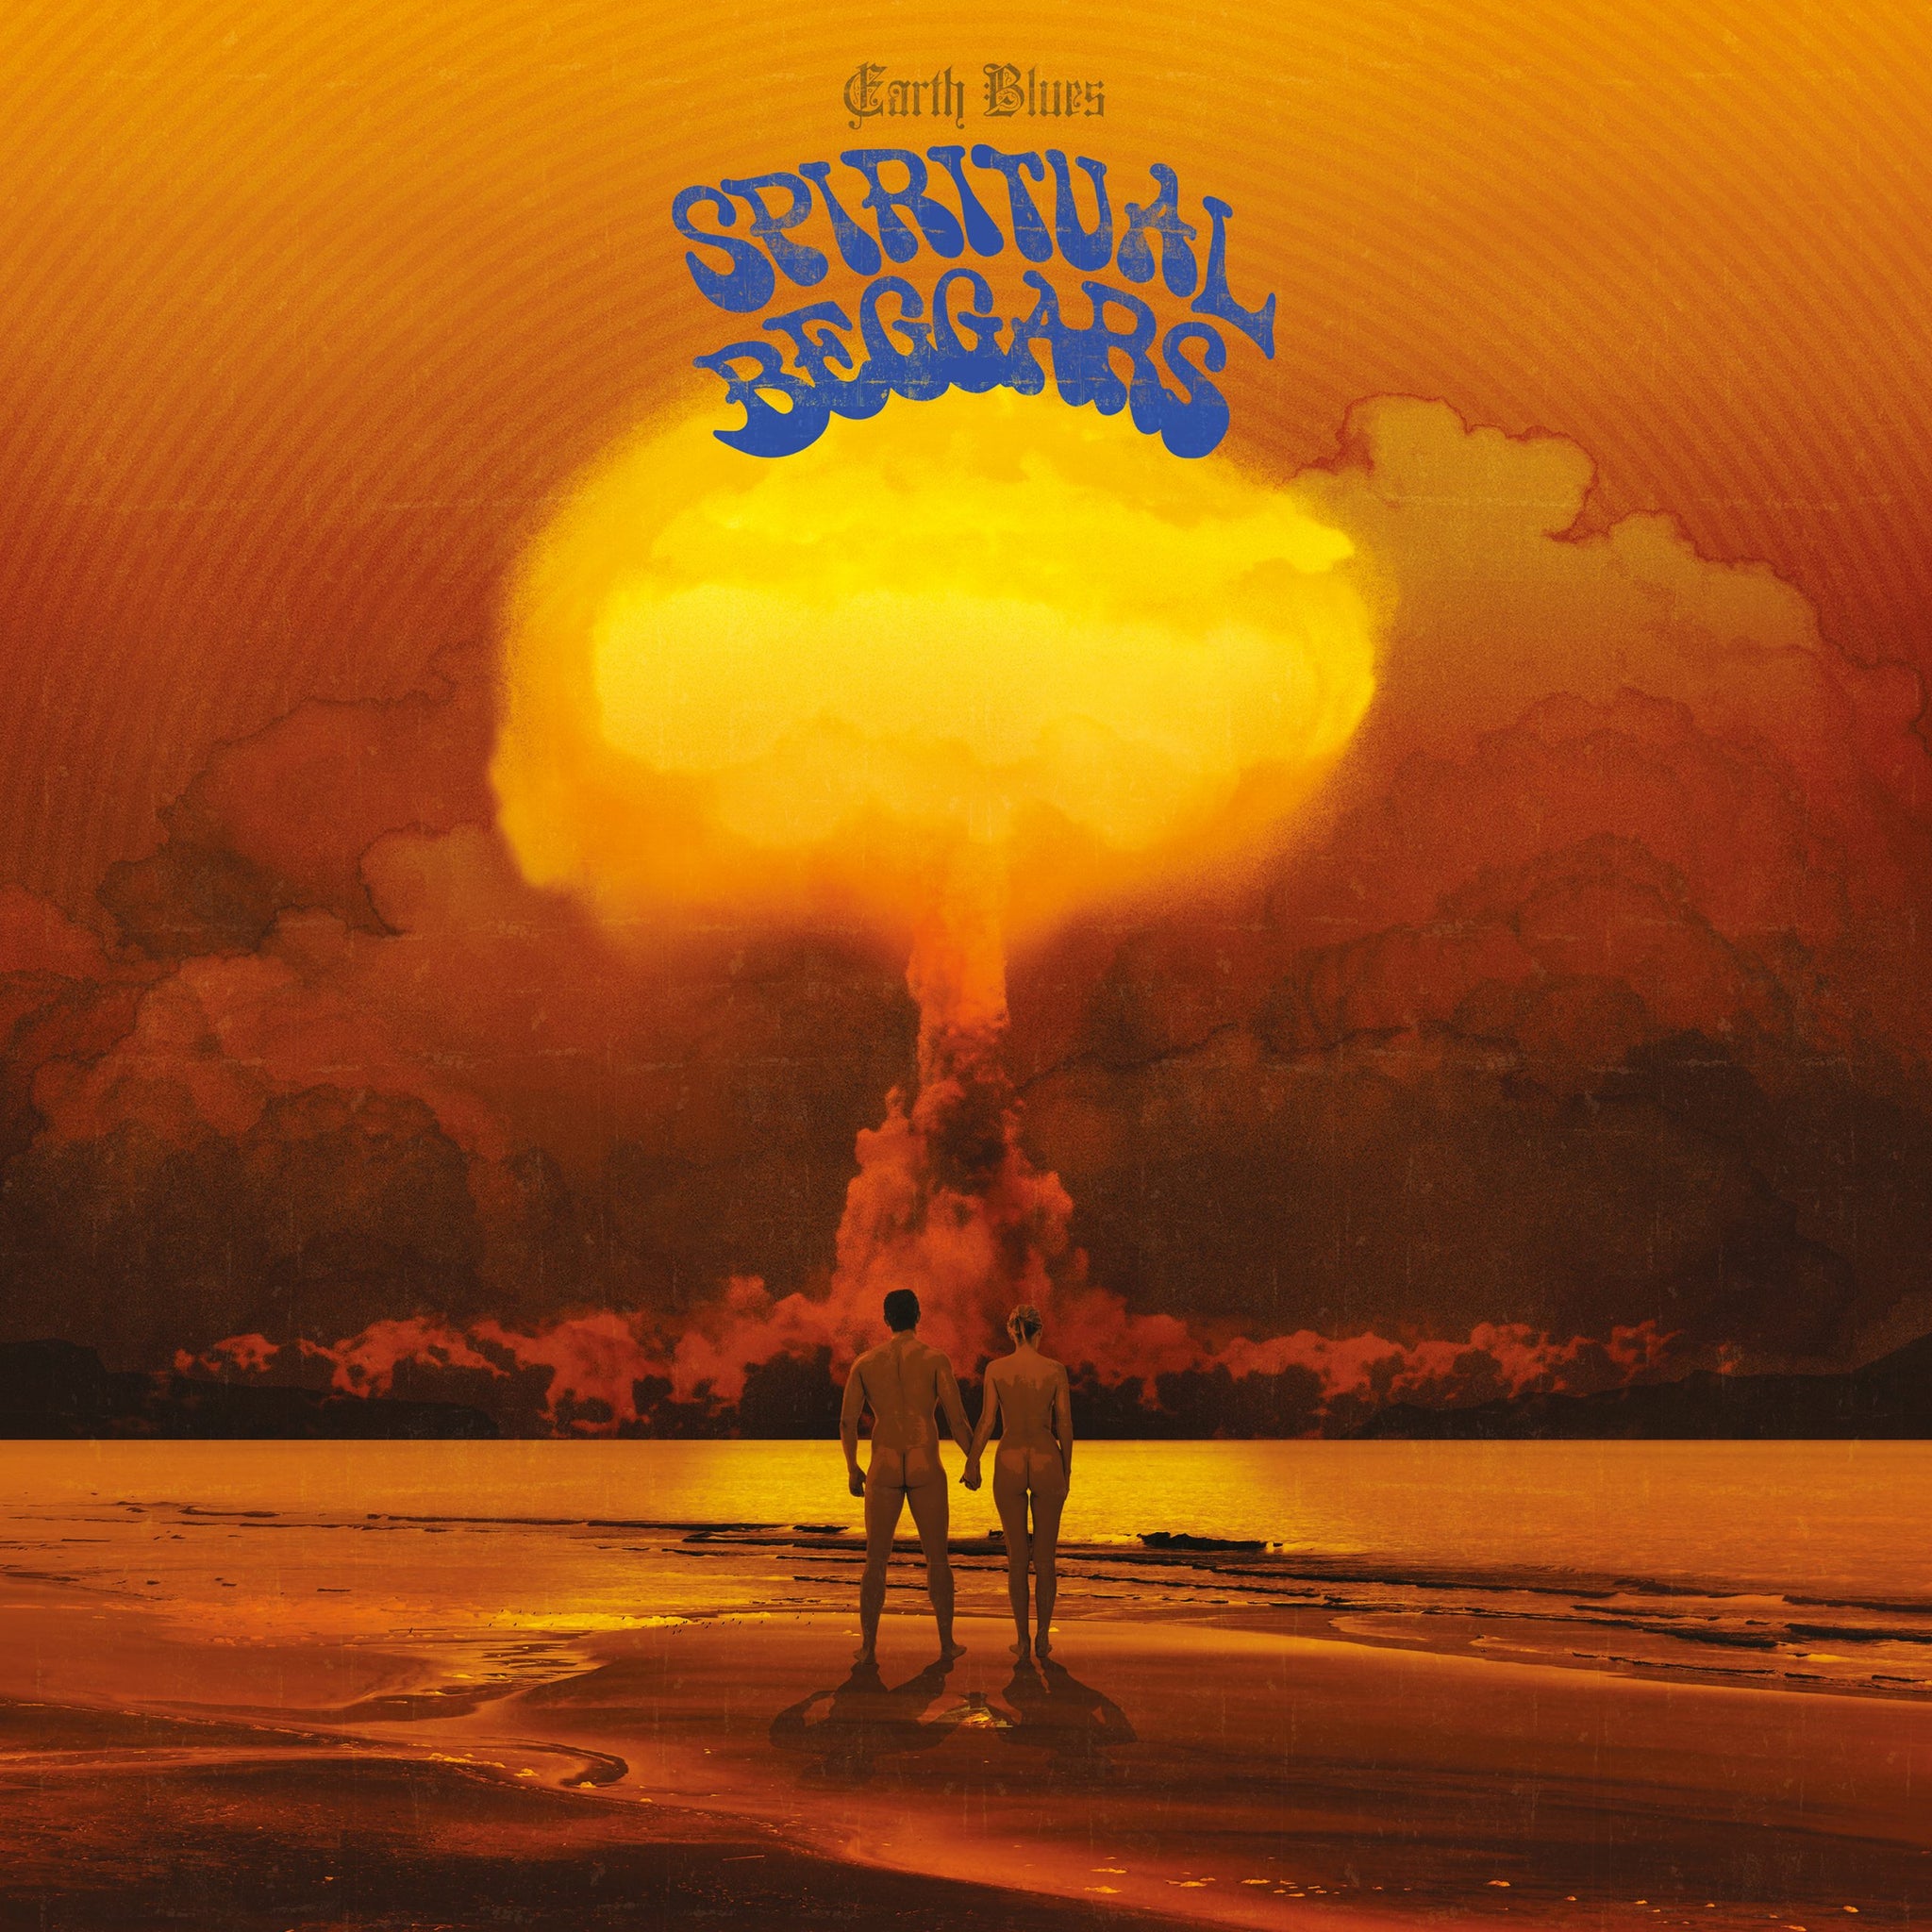 SPIRITUAL BEGGARS - Earth Blues - 2LP - 180g Yellow & Red Splatter Vinyl